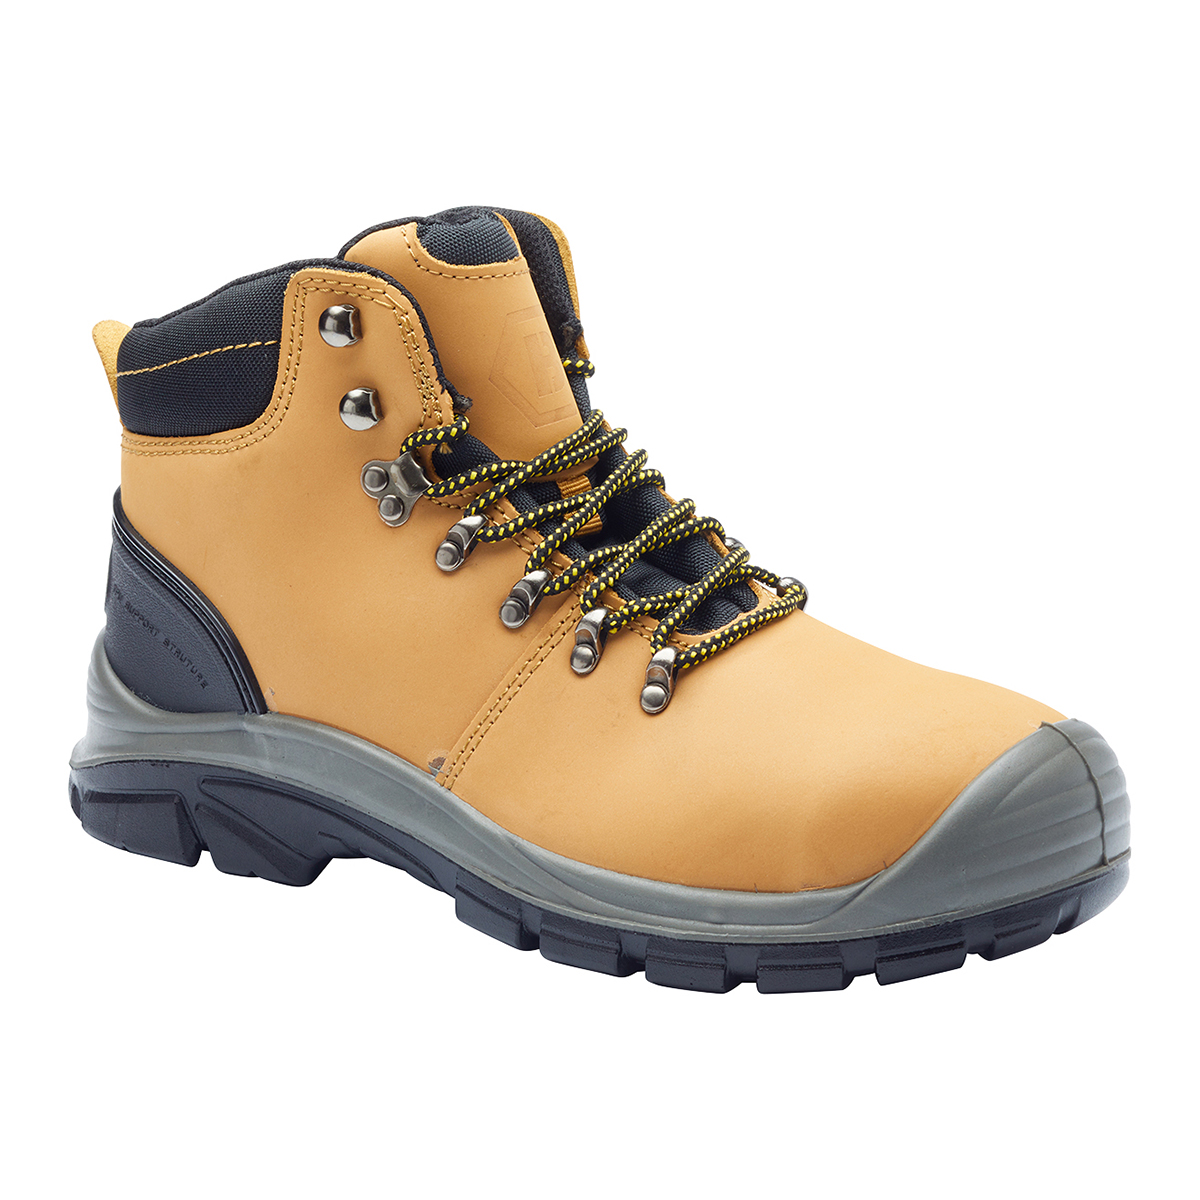 Sf79 malvern hiker boot - honey - size 09